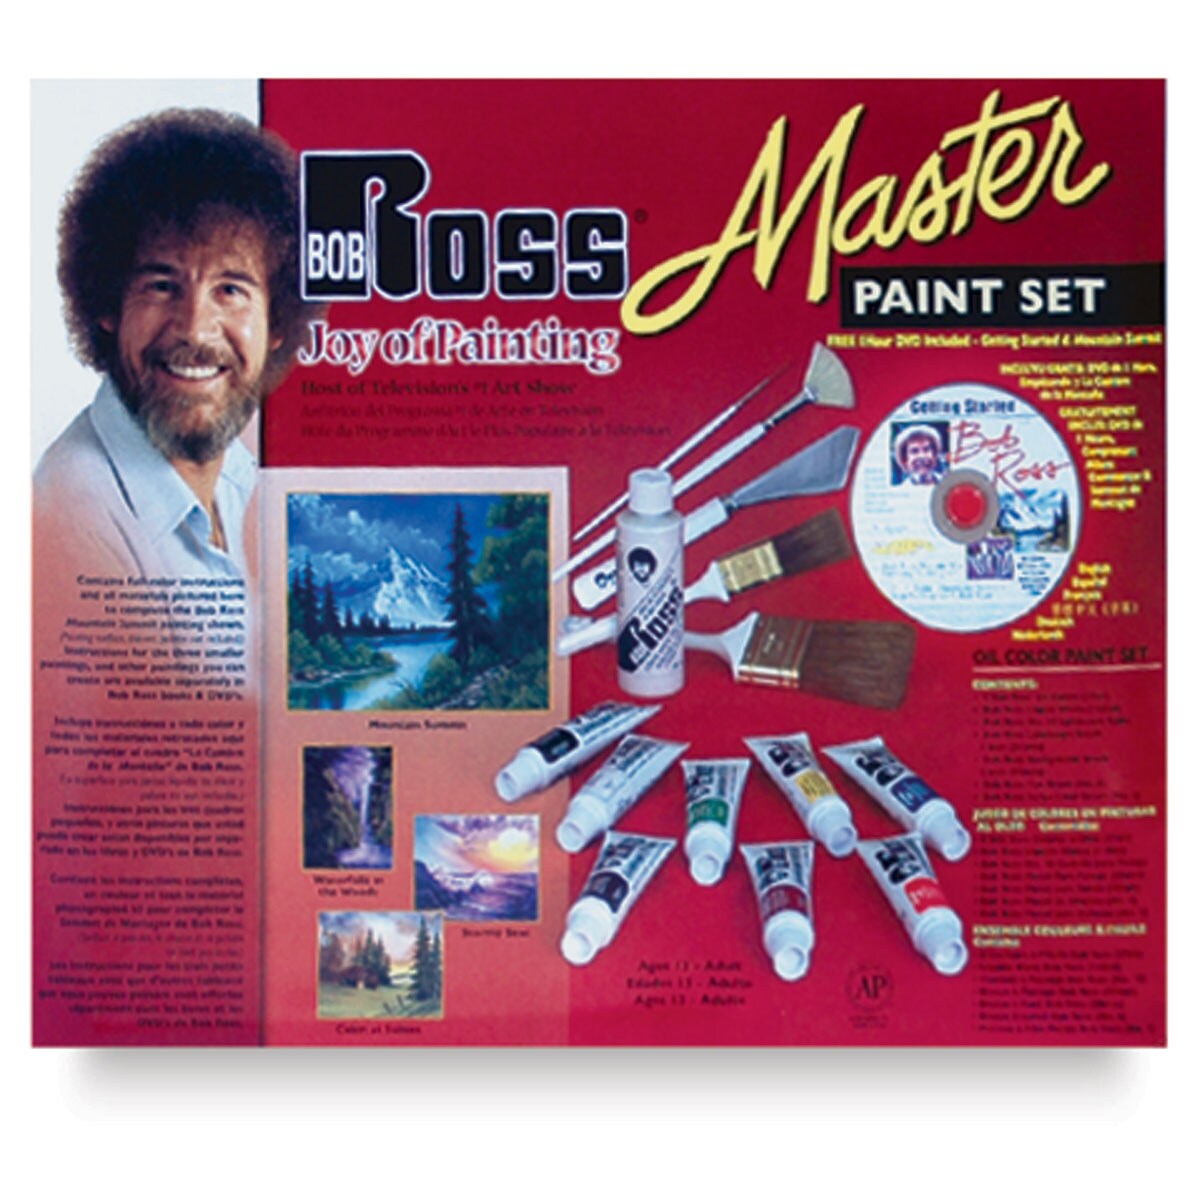 Bob Ross Master Painting Set 